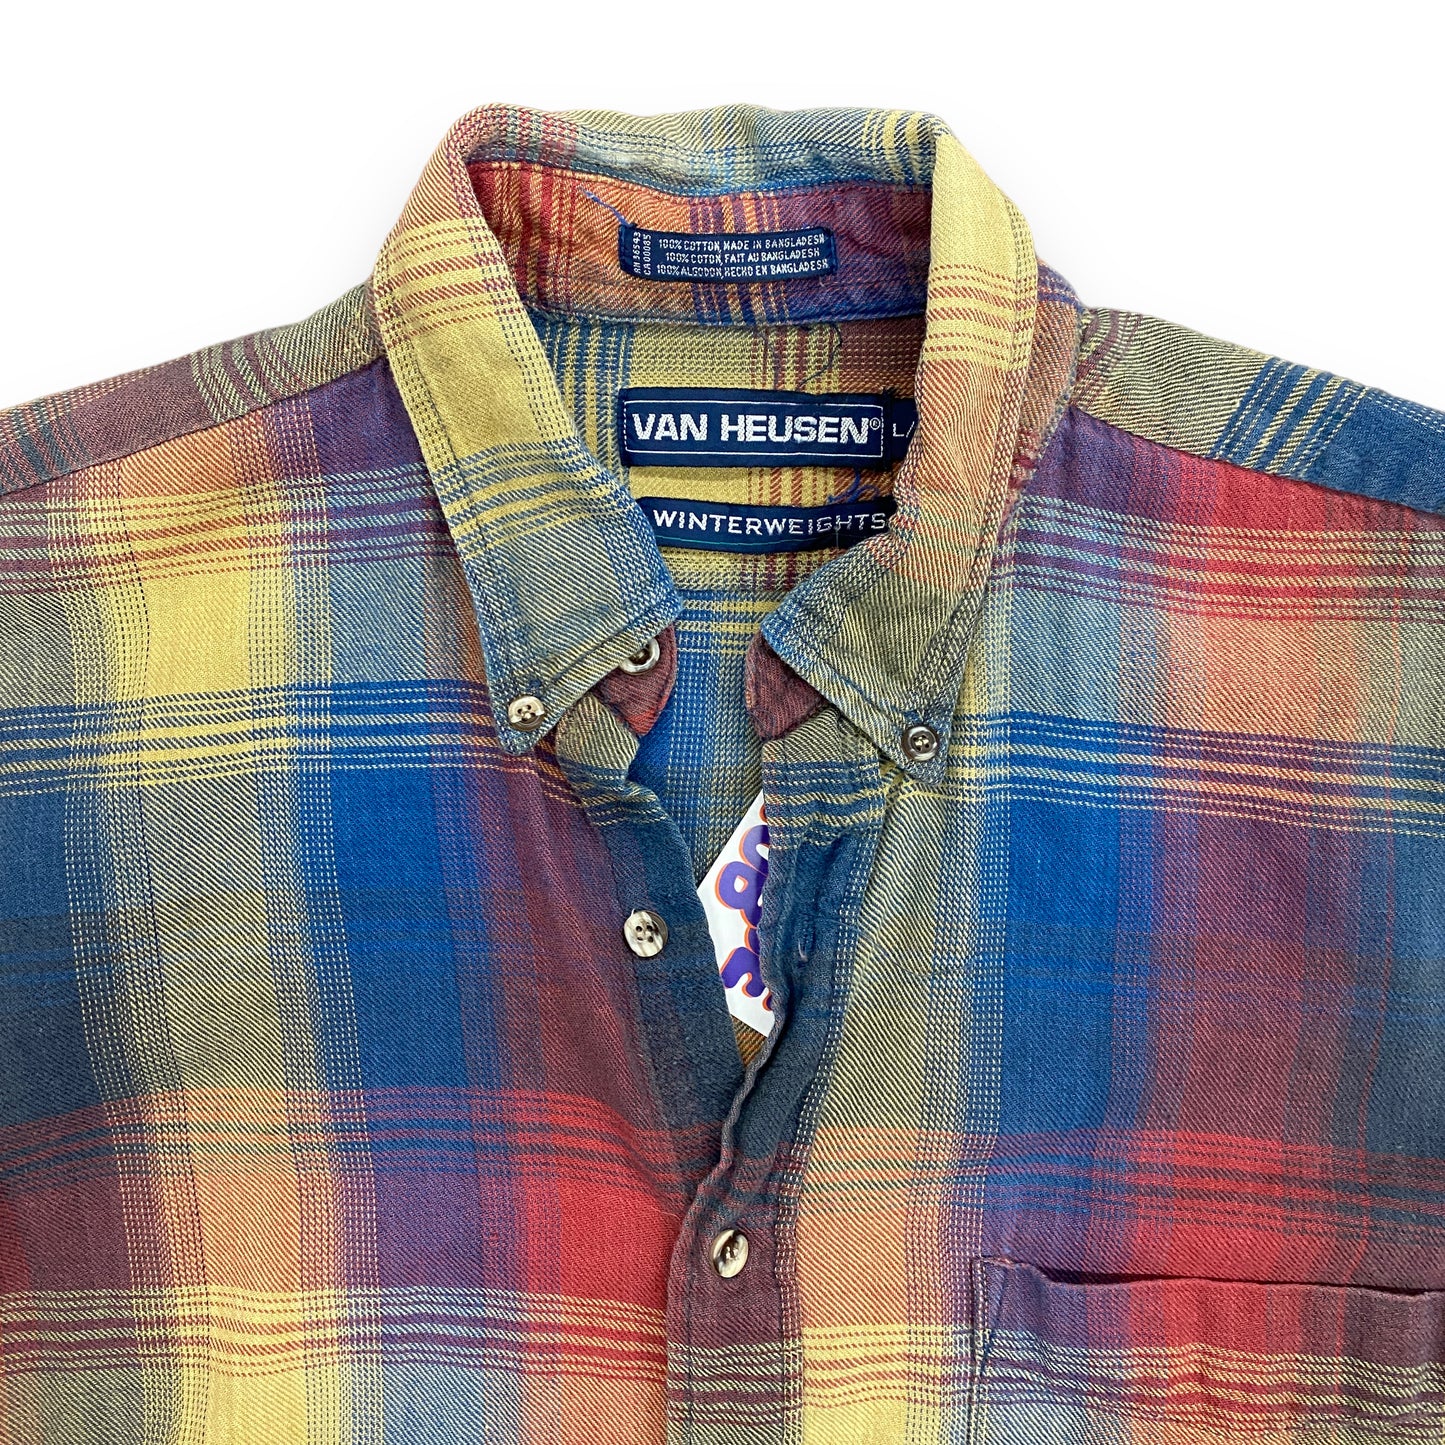 Vintage Van Heusen WinterWeights Flannel Shirt - Size Large